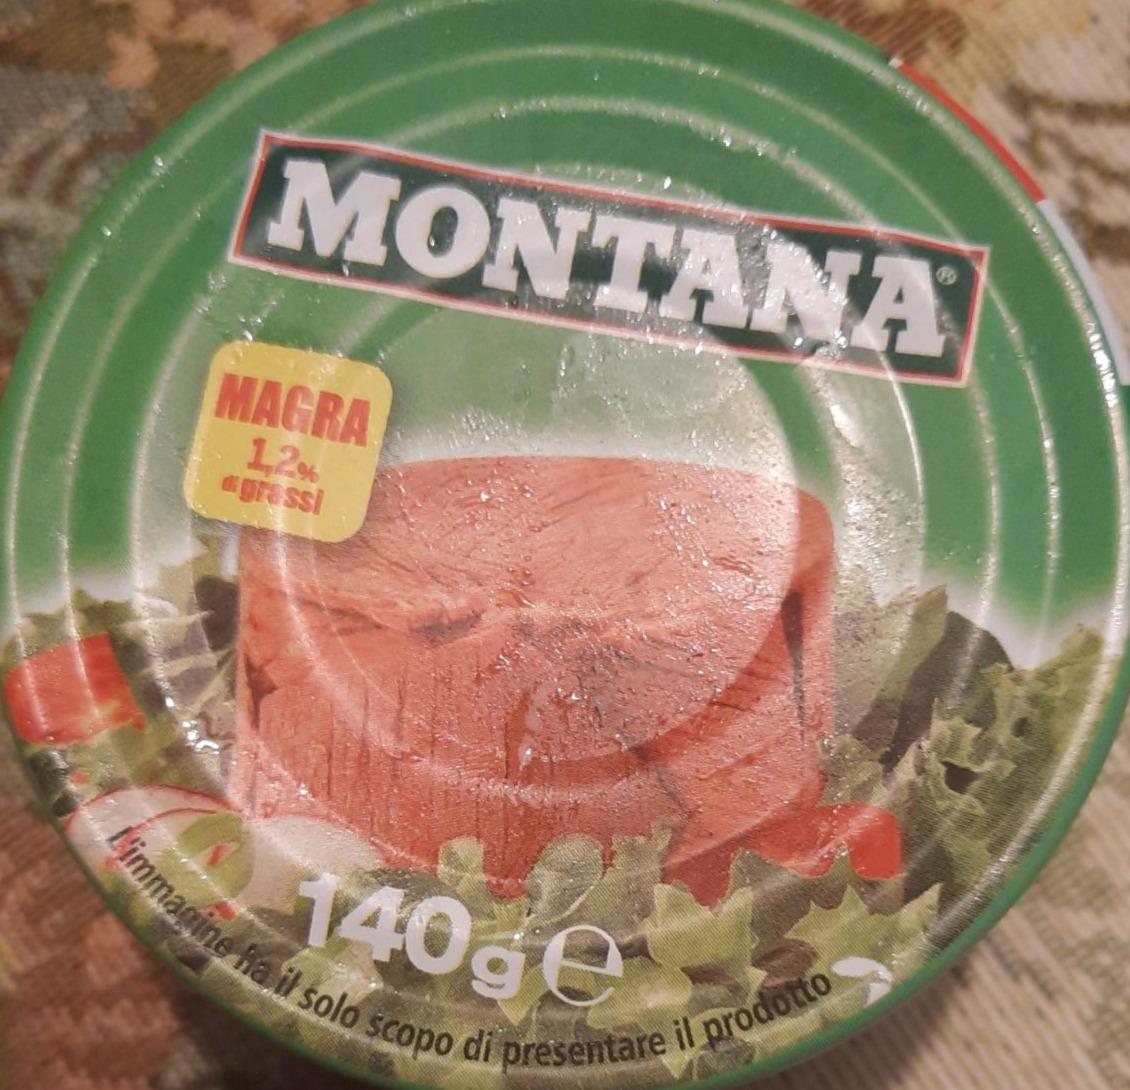 Фото - М'ясо з желе La classica italiana Montana